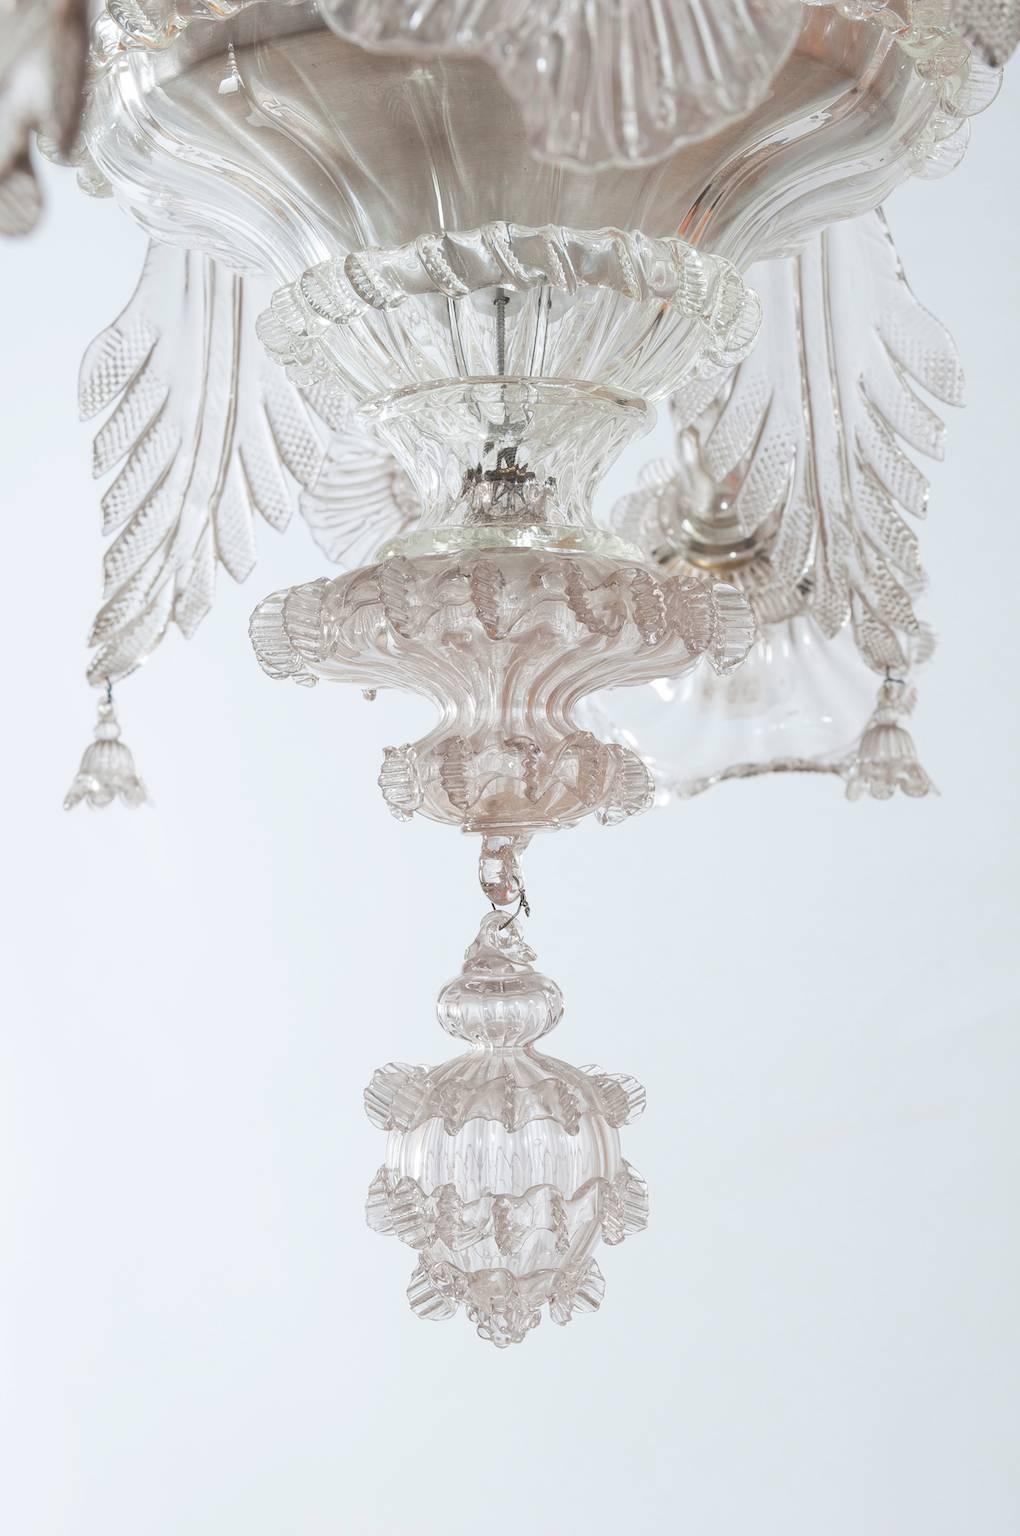 Hand-Crafted Italian Chandelier in Murano Glass in the Style of Galliano Ferro, circa 1920s